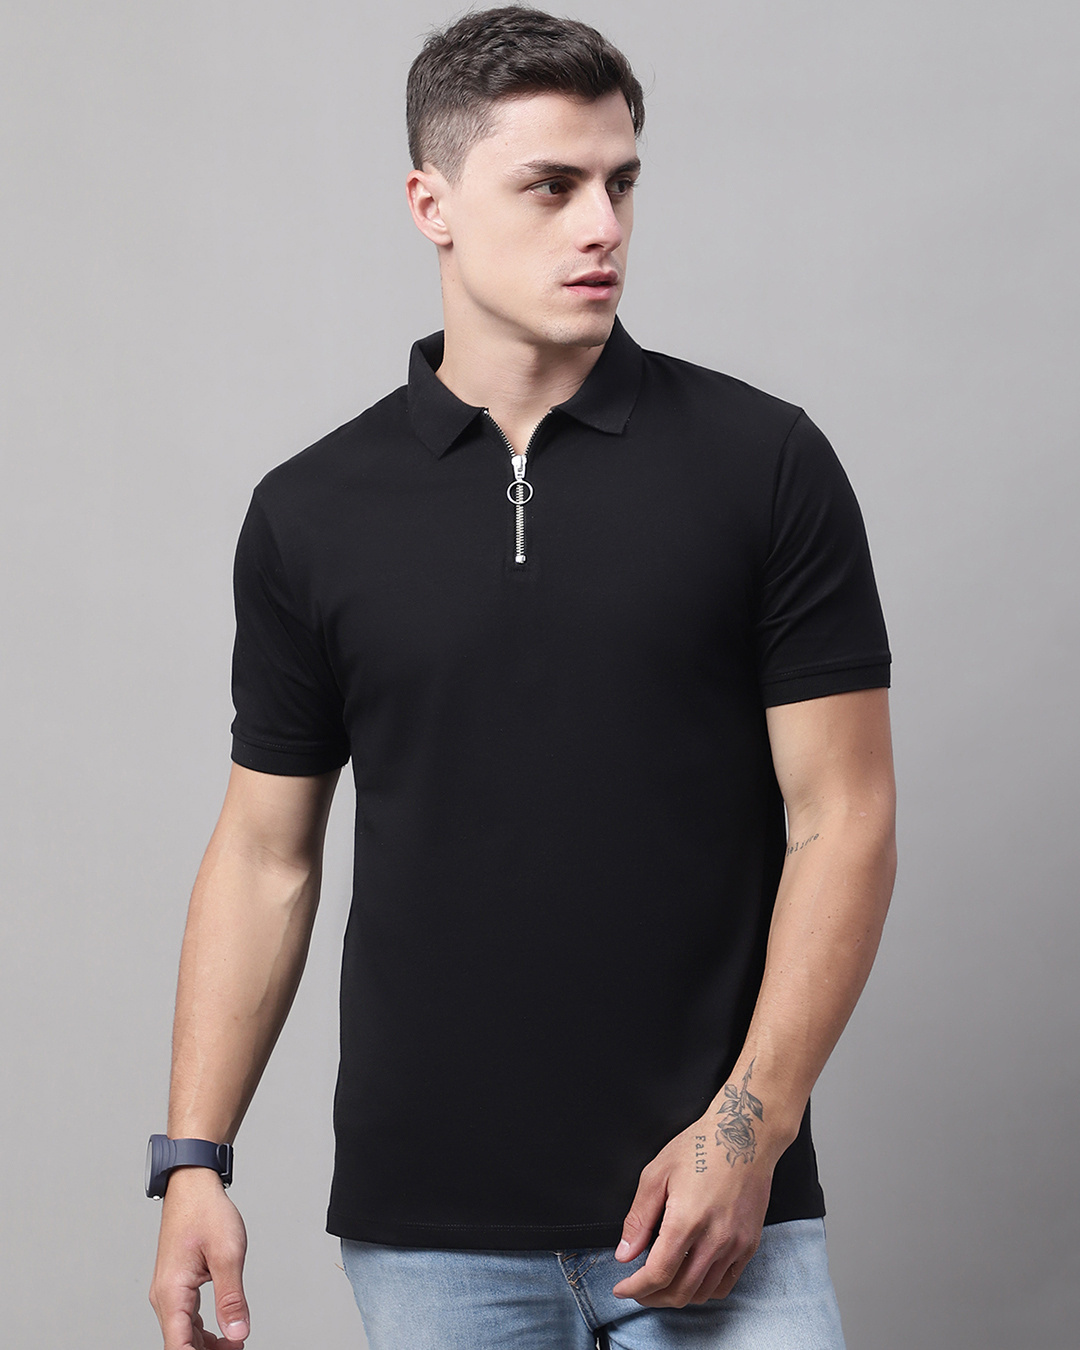 Buy Men's Black T-shirt Online at Bewakoof